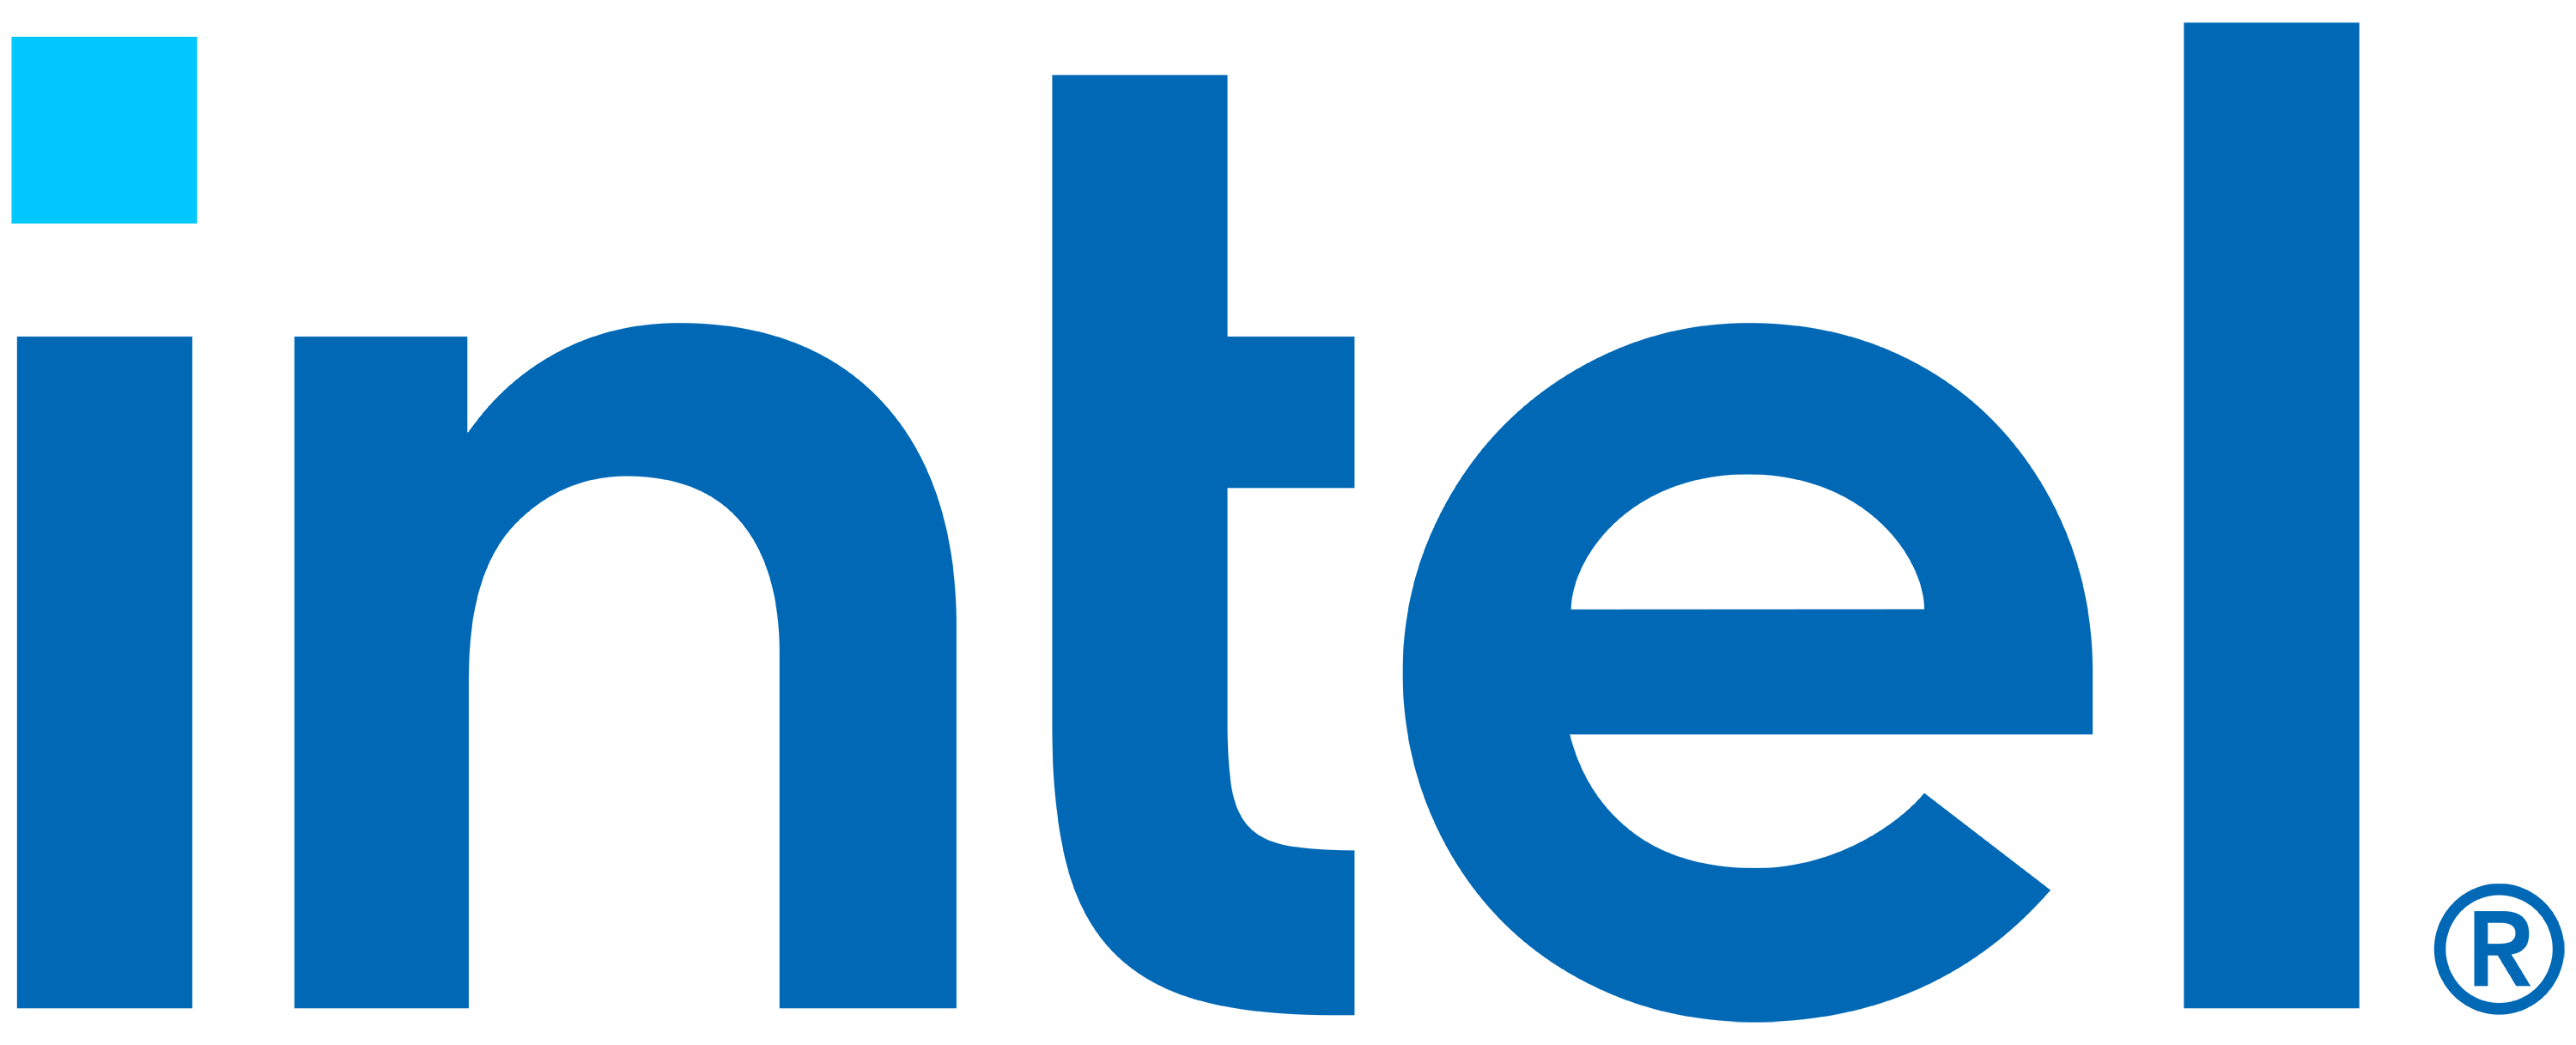 Intel-logo-nobox